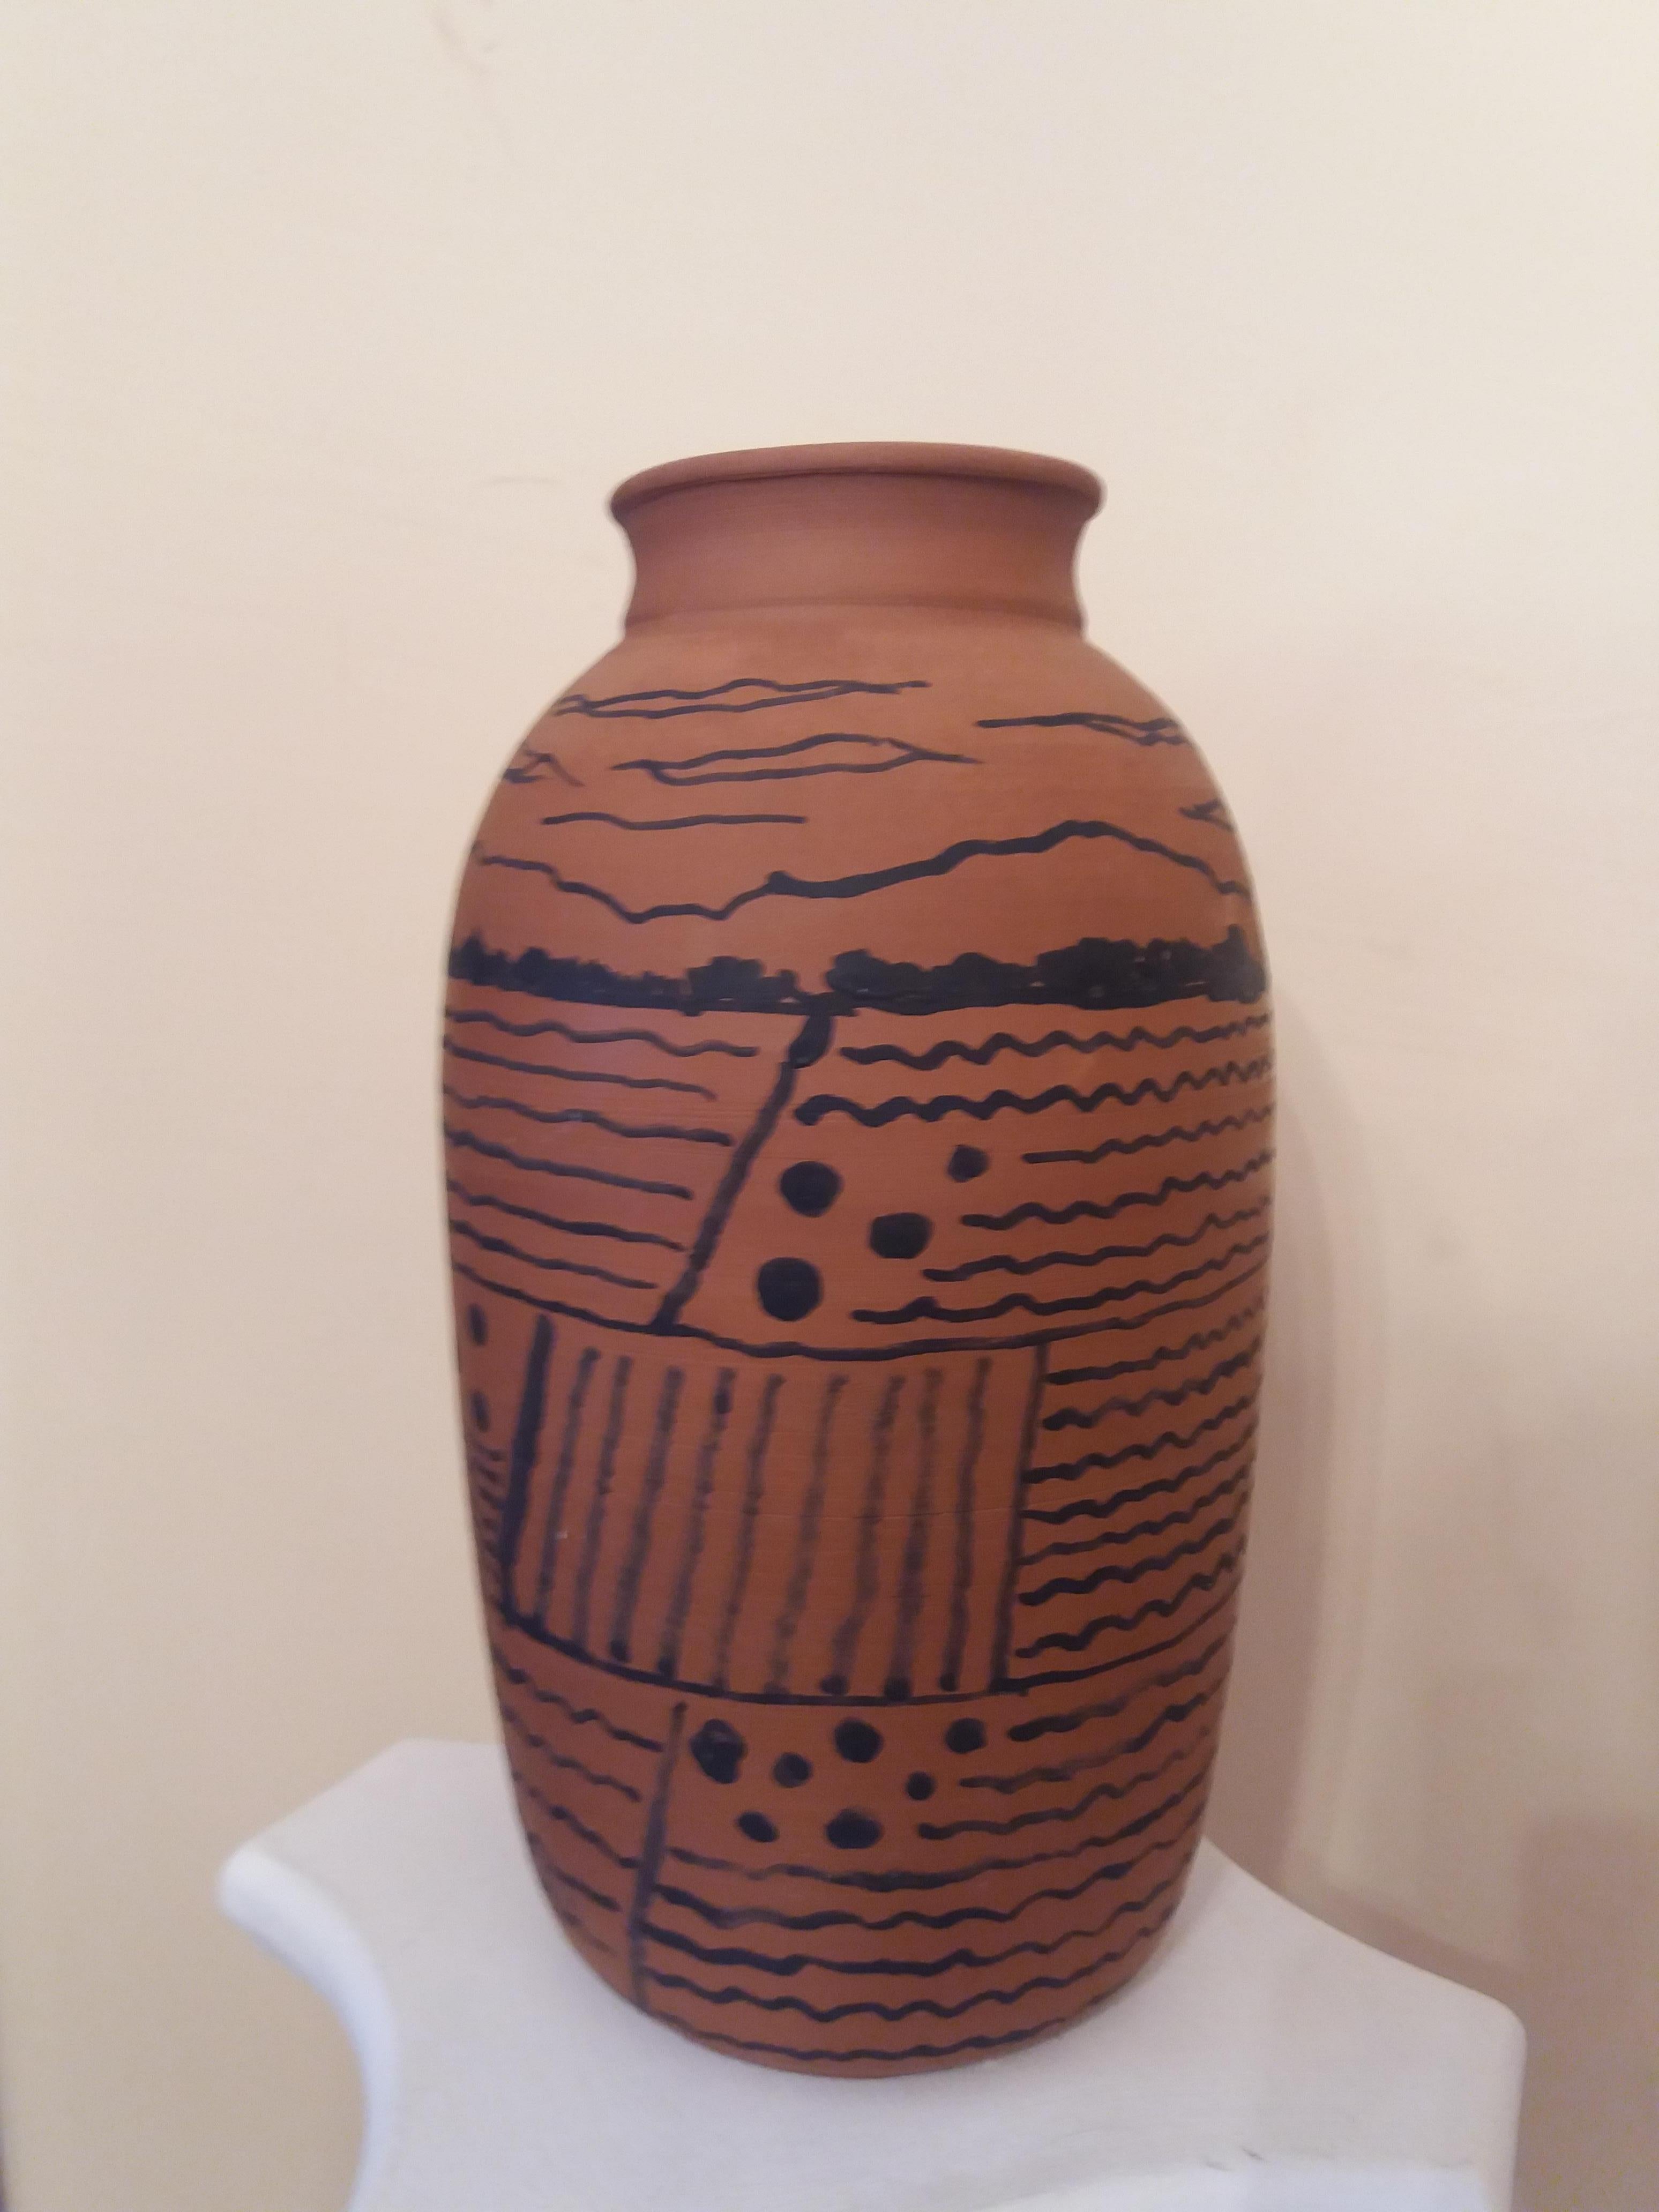  Graspar Riera  6 Terracotta Cylinder  Mallorca original ceramic sculpture - Sculpture by Gaspar Riera Moragues